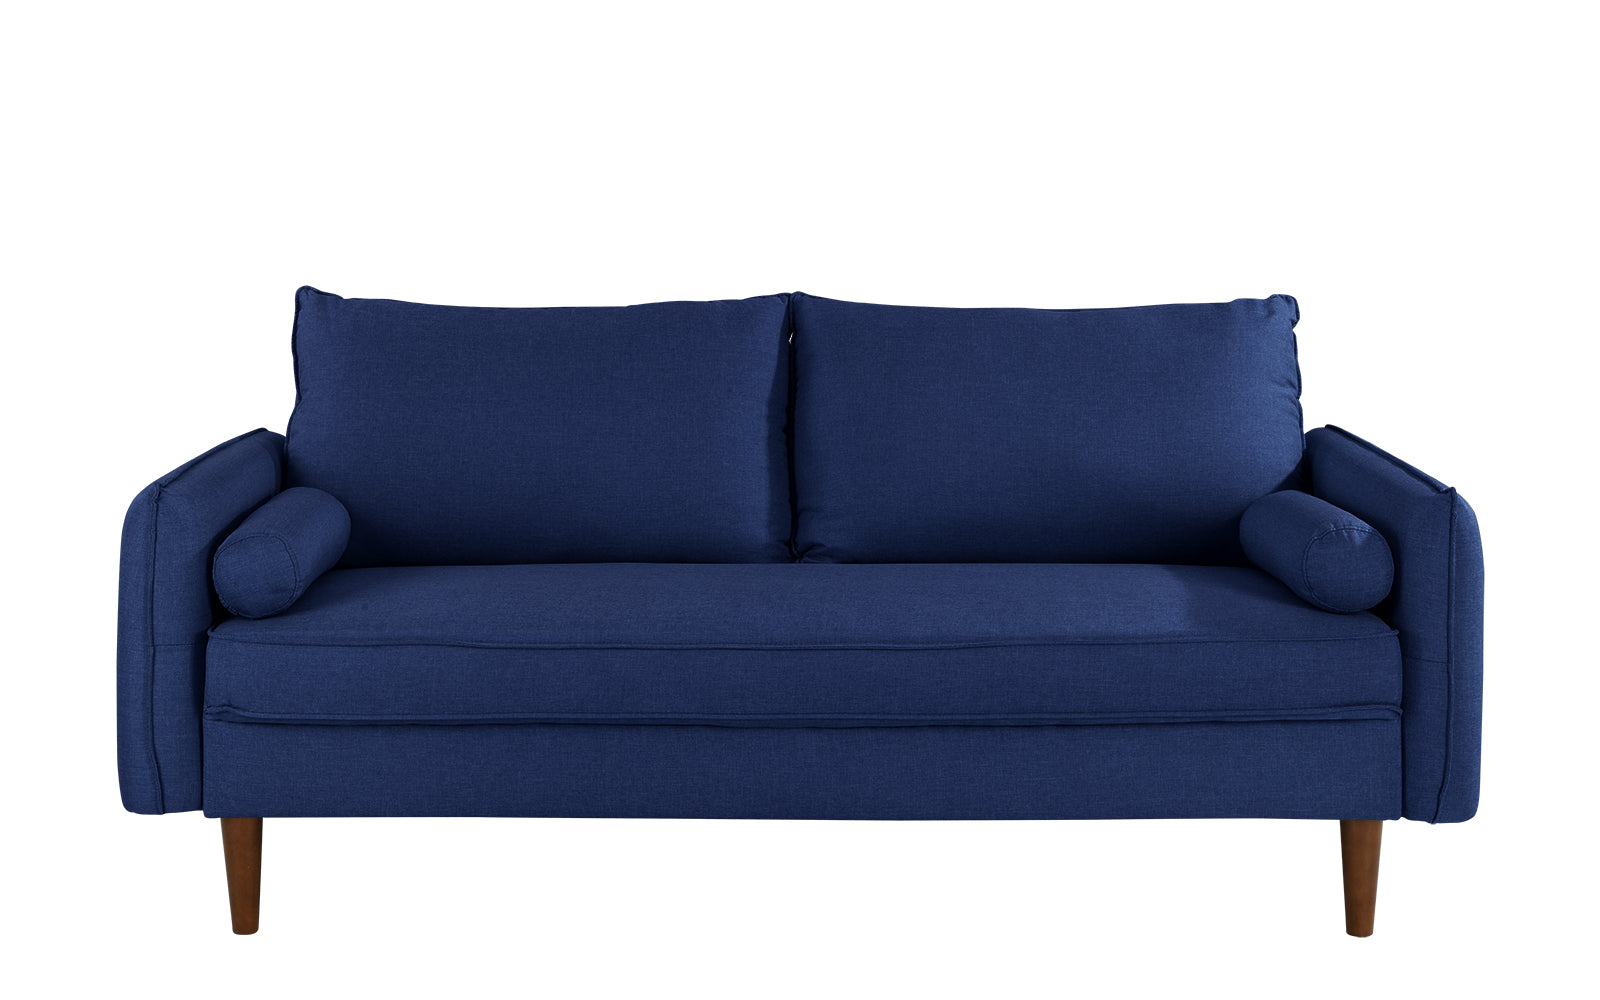 Sevy Mid Century Modern Linen Sofa With Bolster Pillows